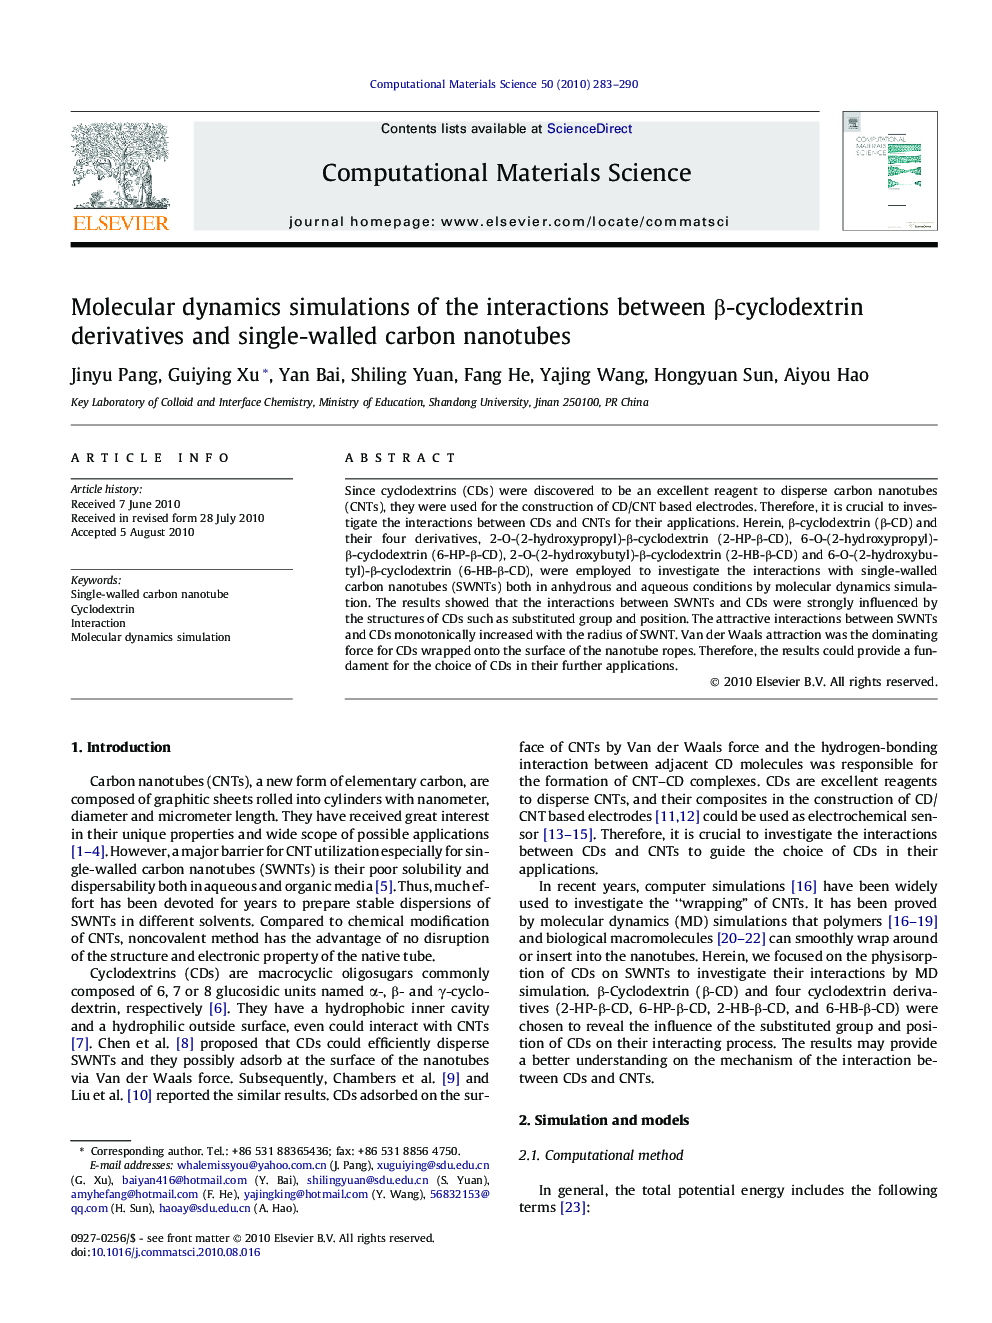 Molecular dynamics simulations of the interactions between Î²-cyclodextrin derivatives and single-walled carbon nanotubes